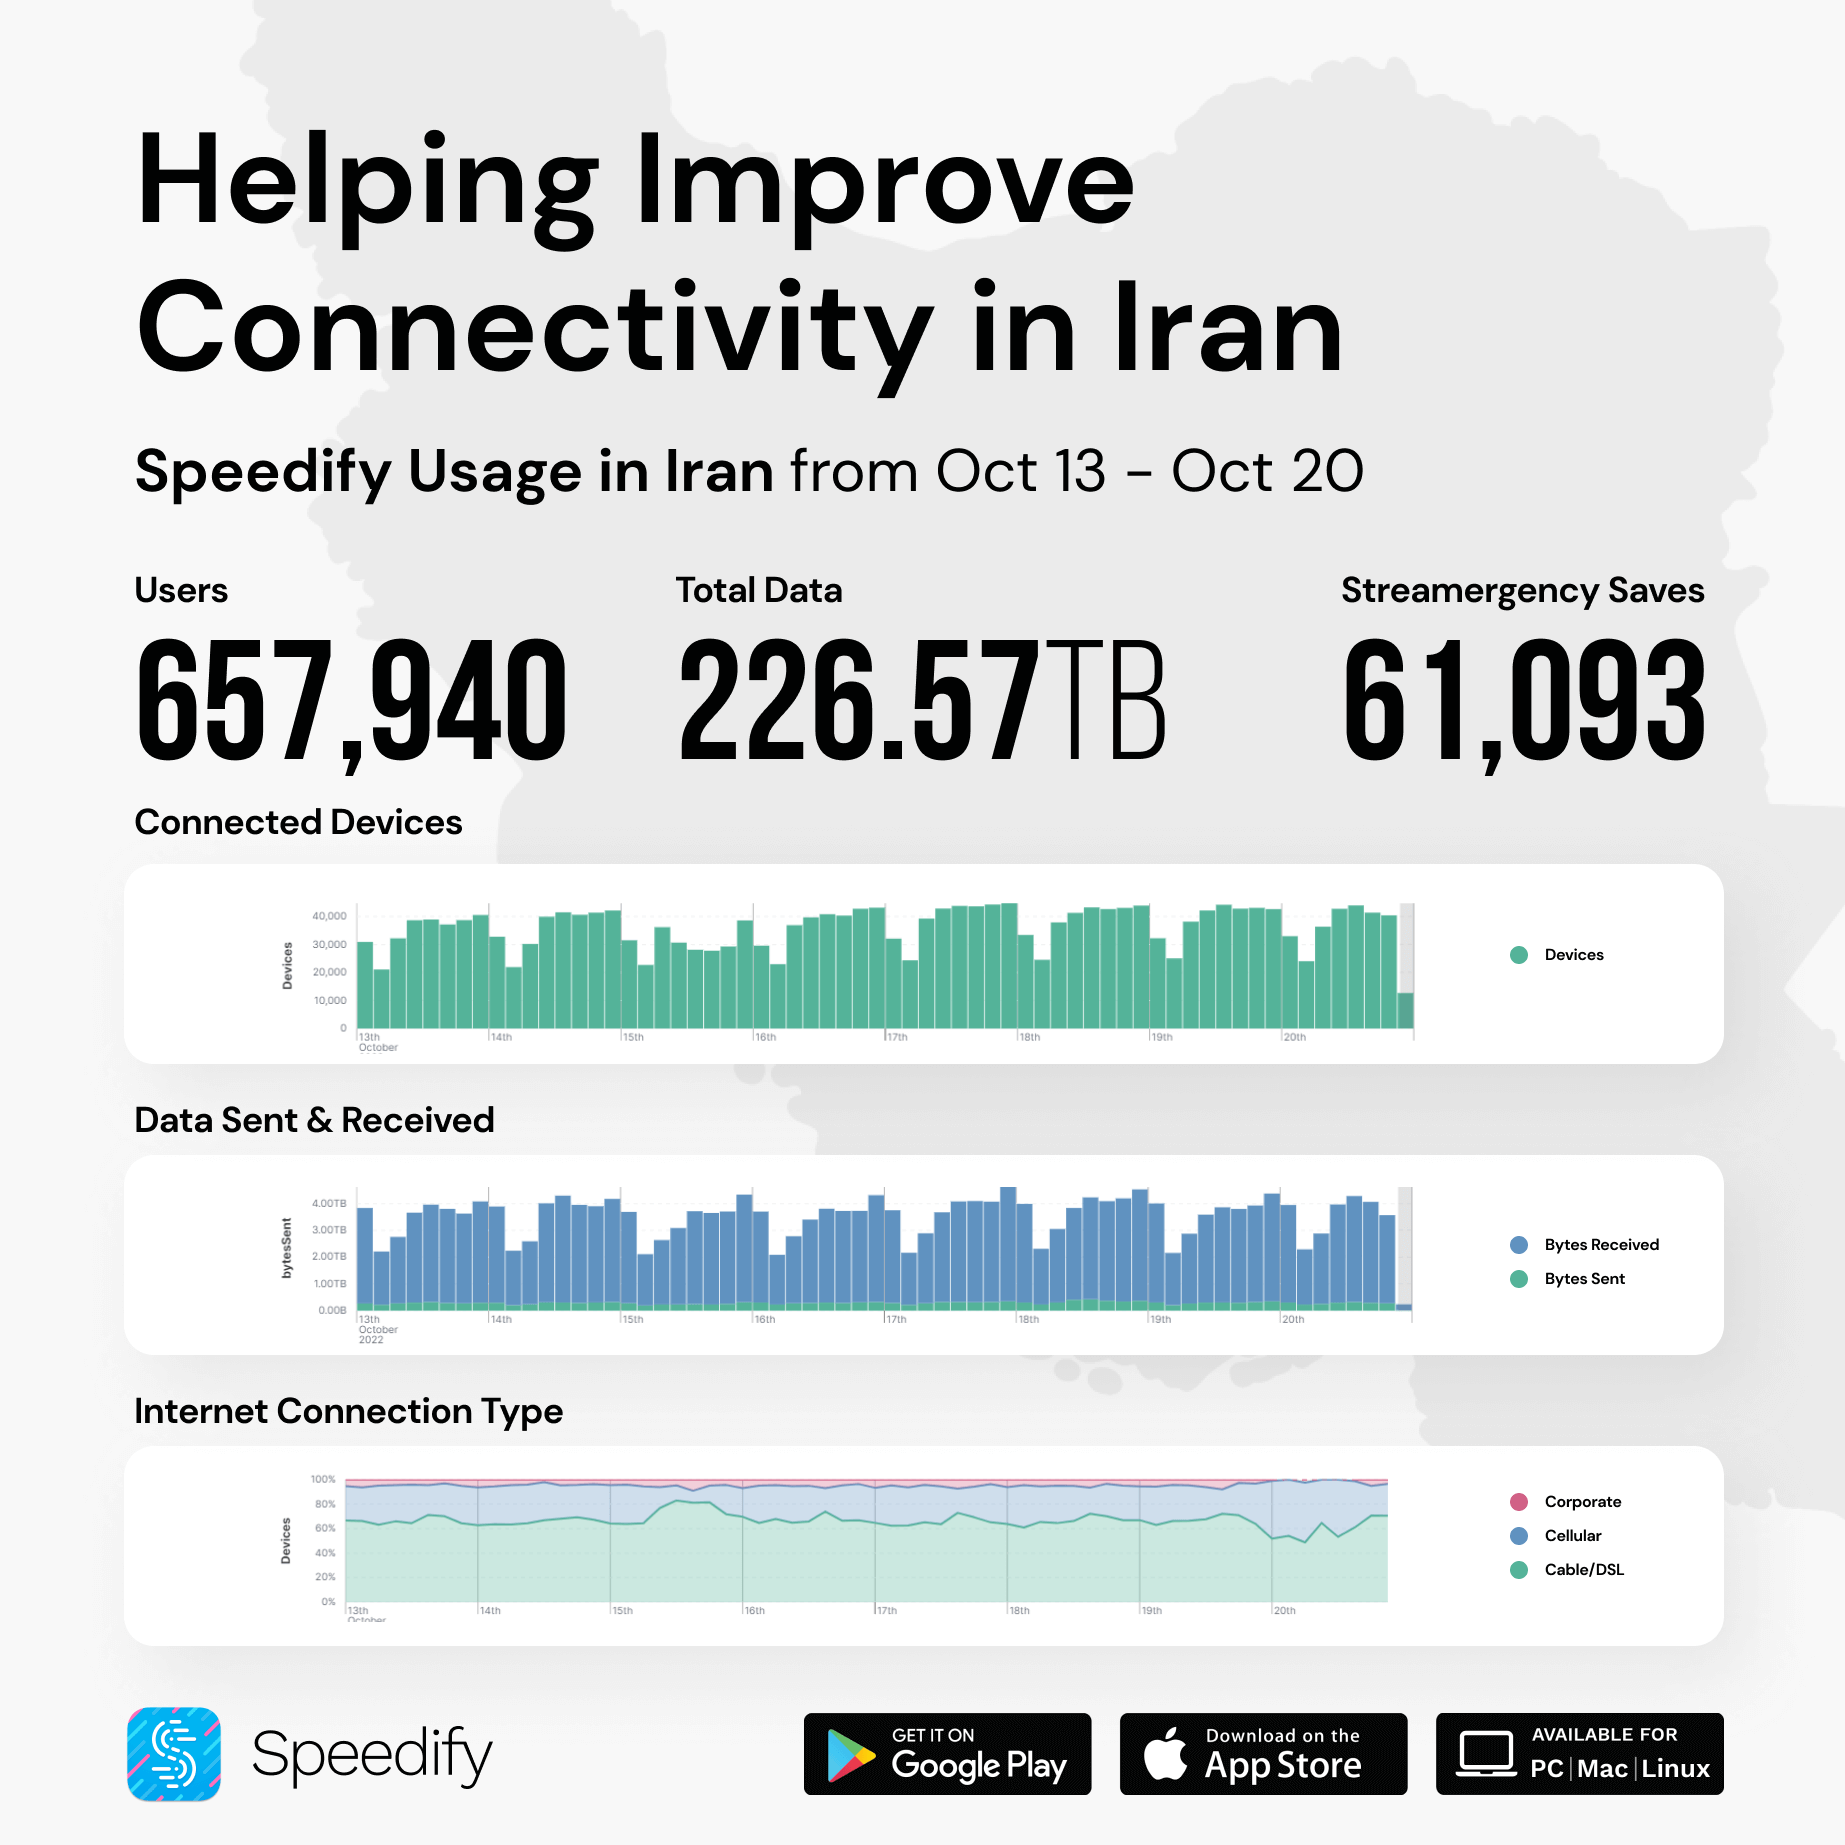 Oct 20 - Iran Internet usage for Speedify users